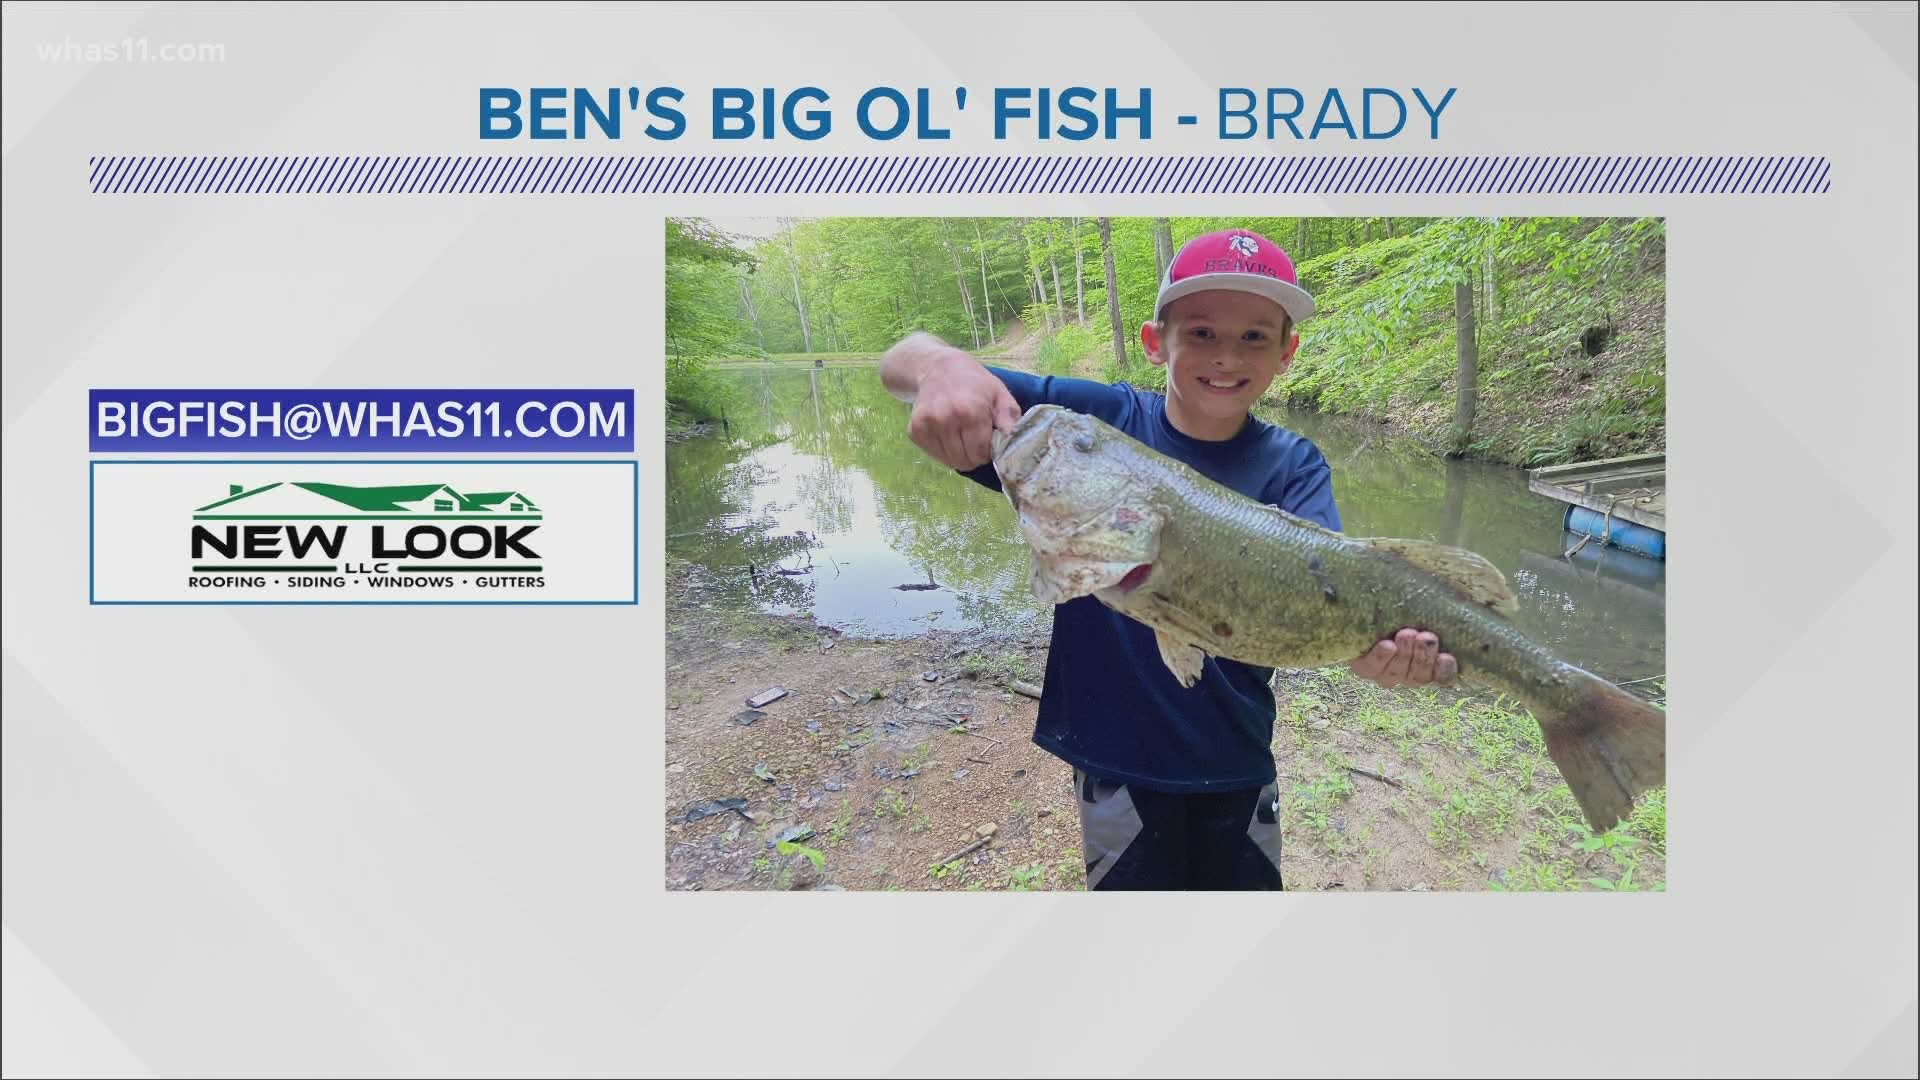 Ben's Big Ol' Fish is back!